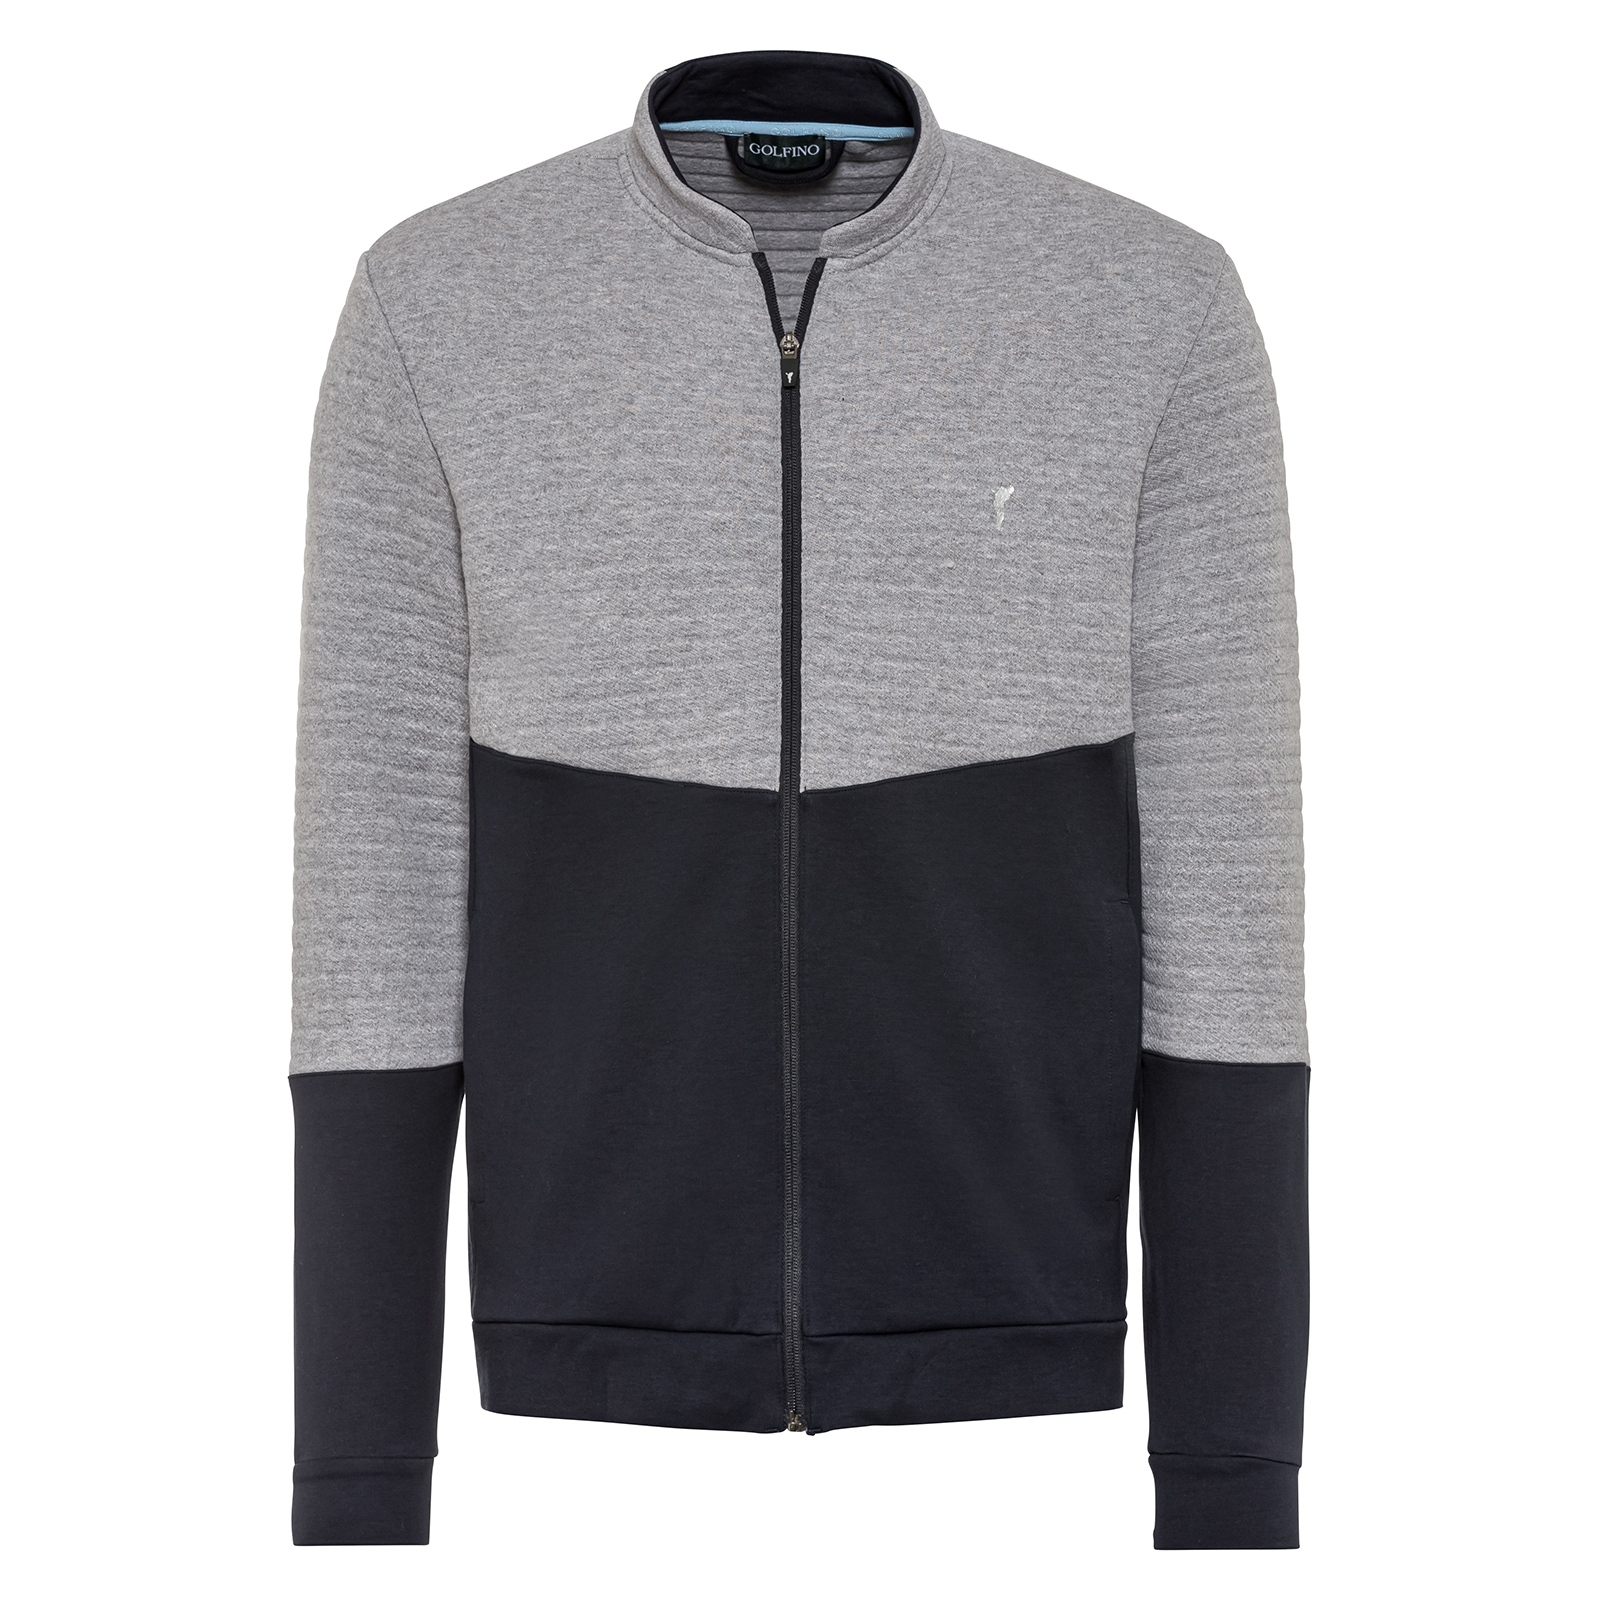 Men's golf sweatshirt jacket with colour blocking design 